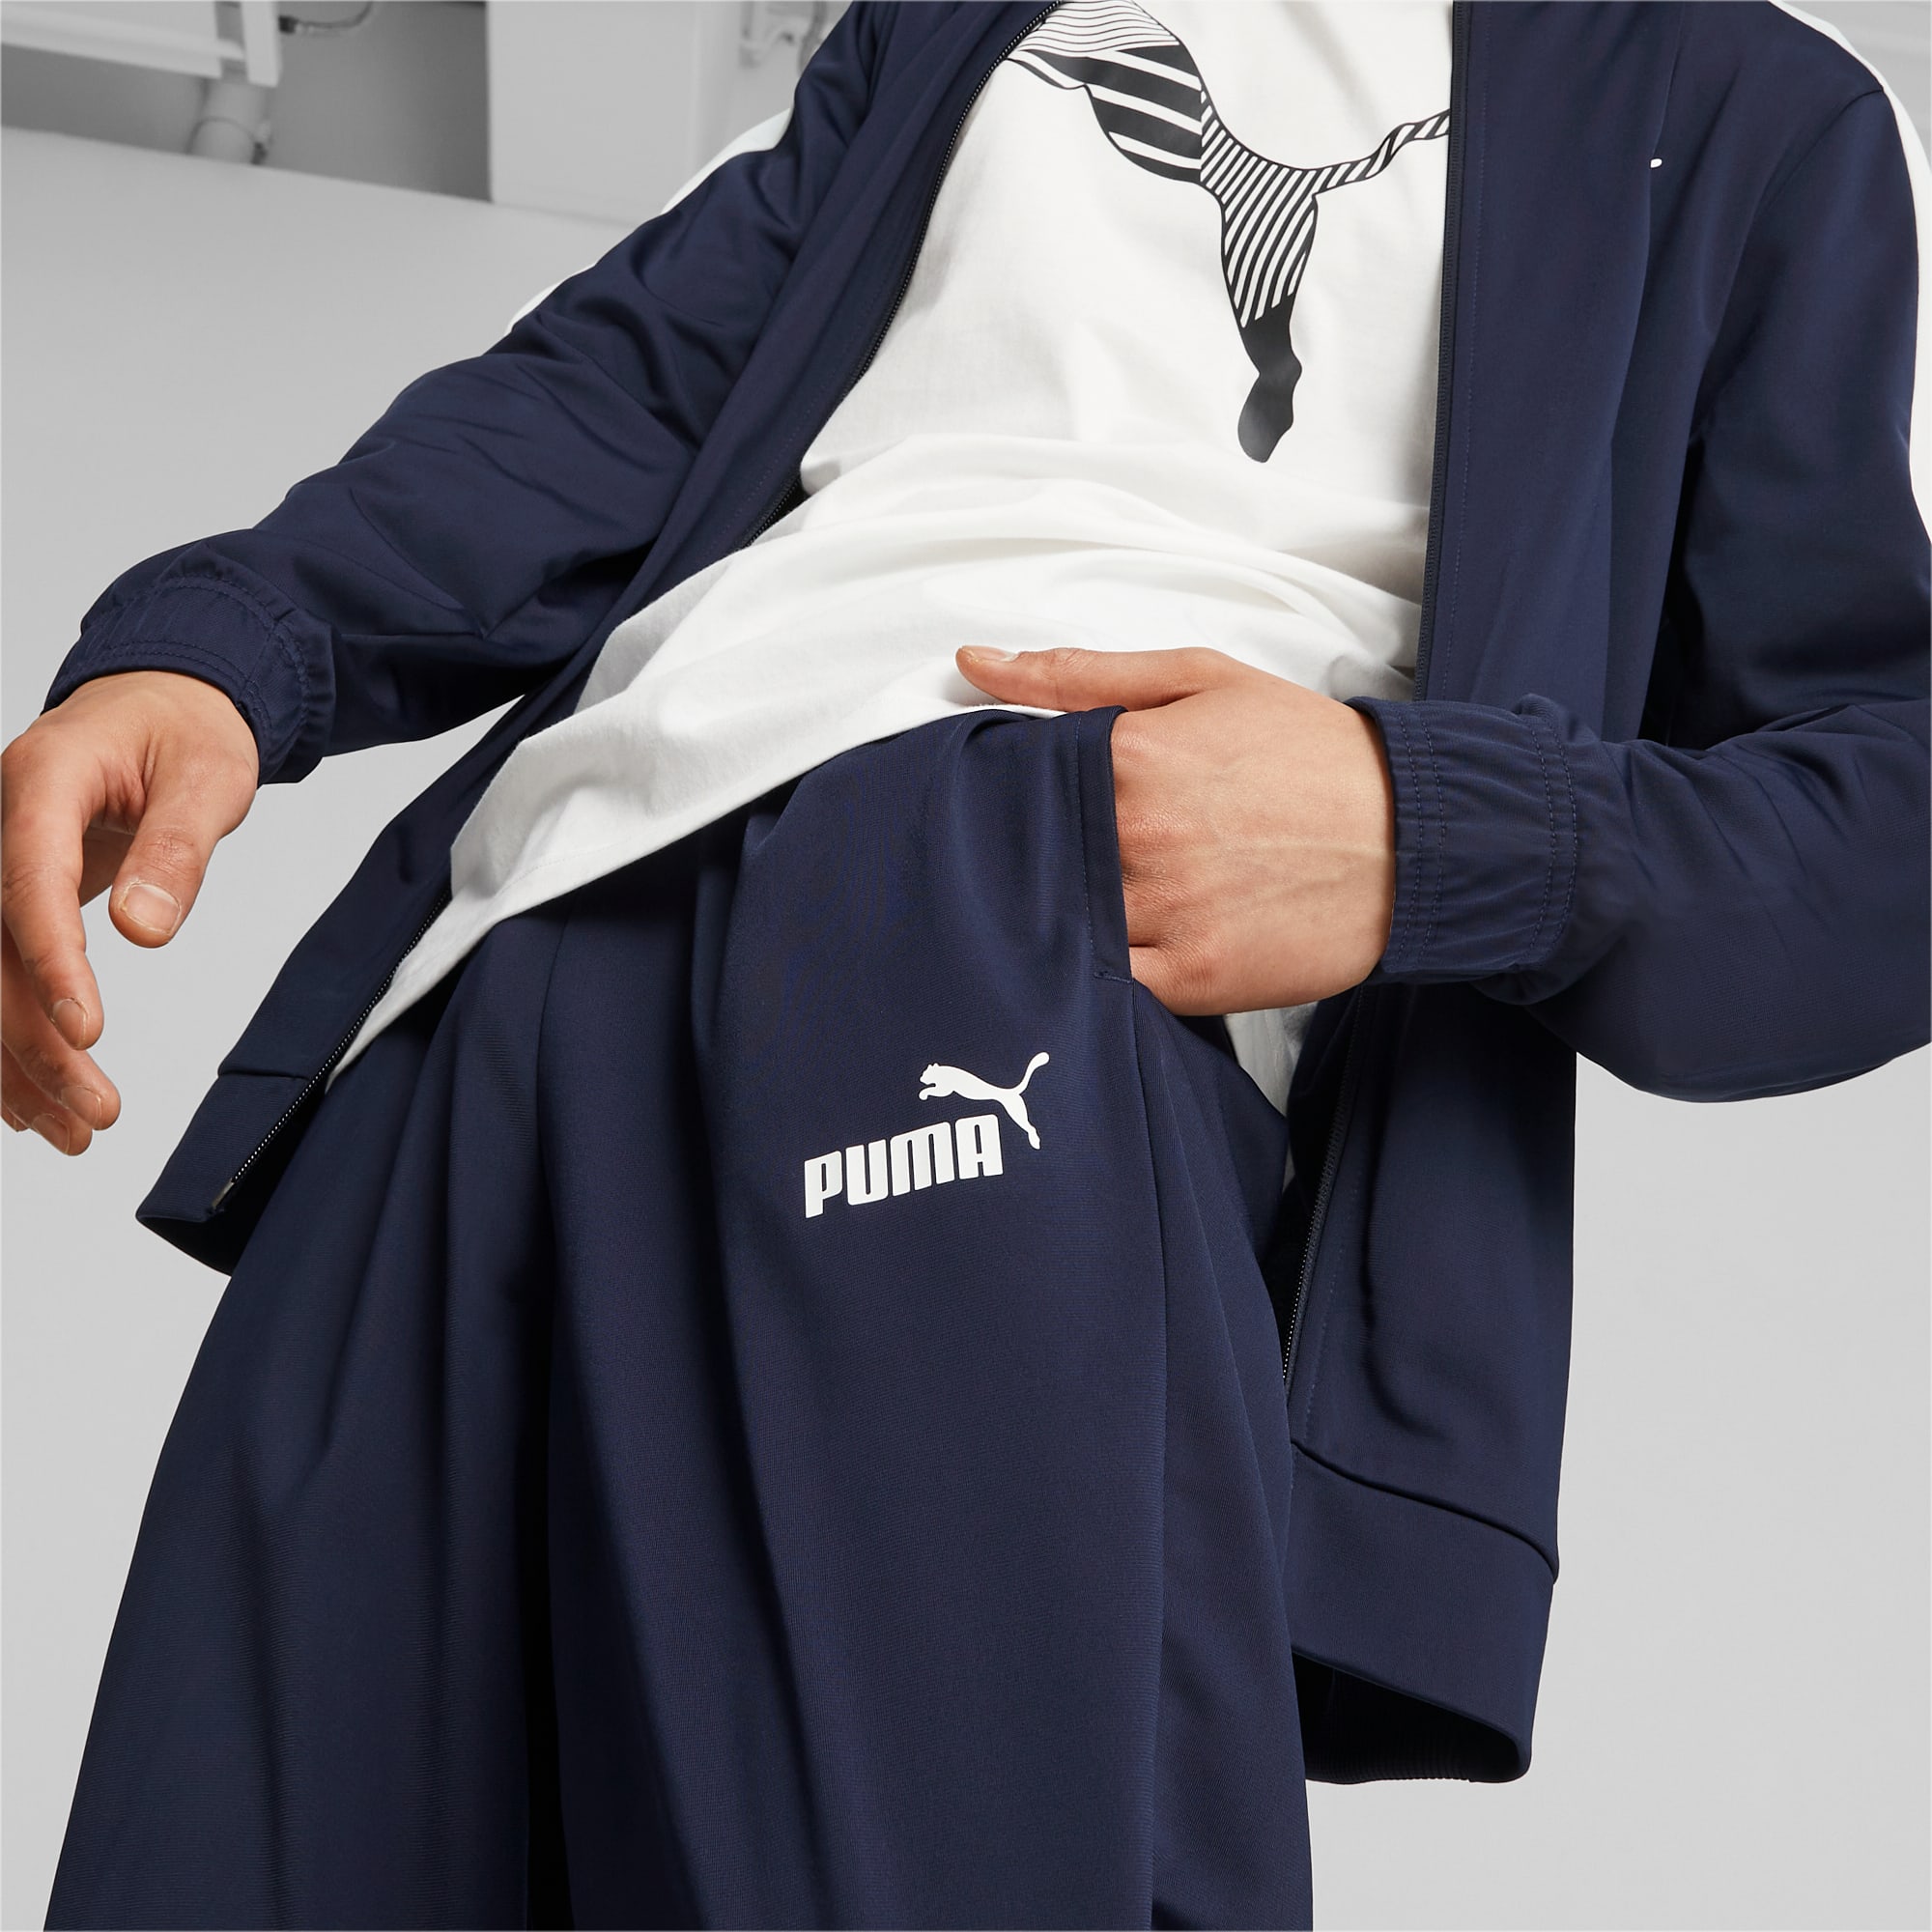 PUMA Men's Baseball Tricot Suit, Dark Blue, Size S